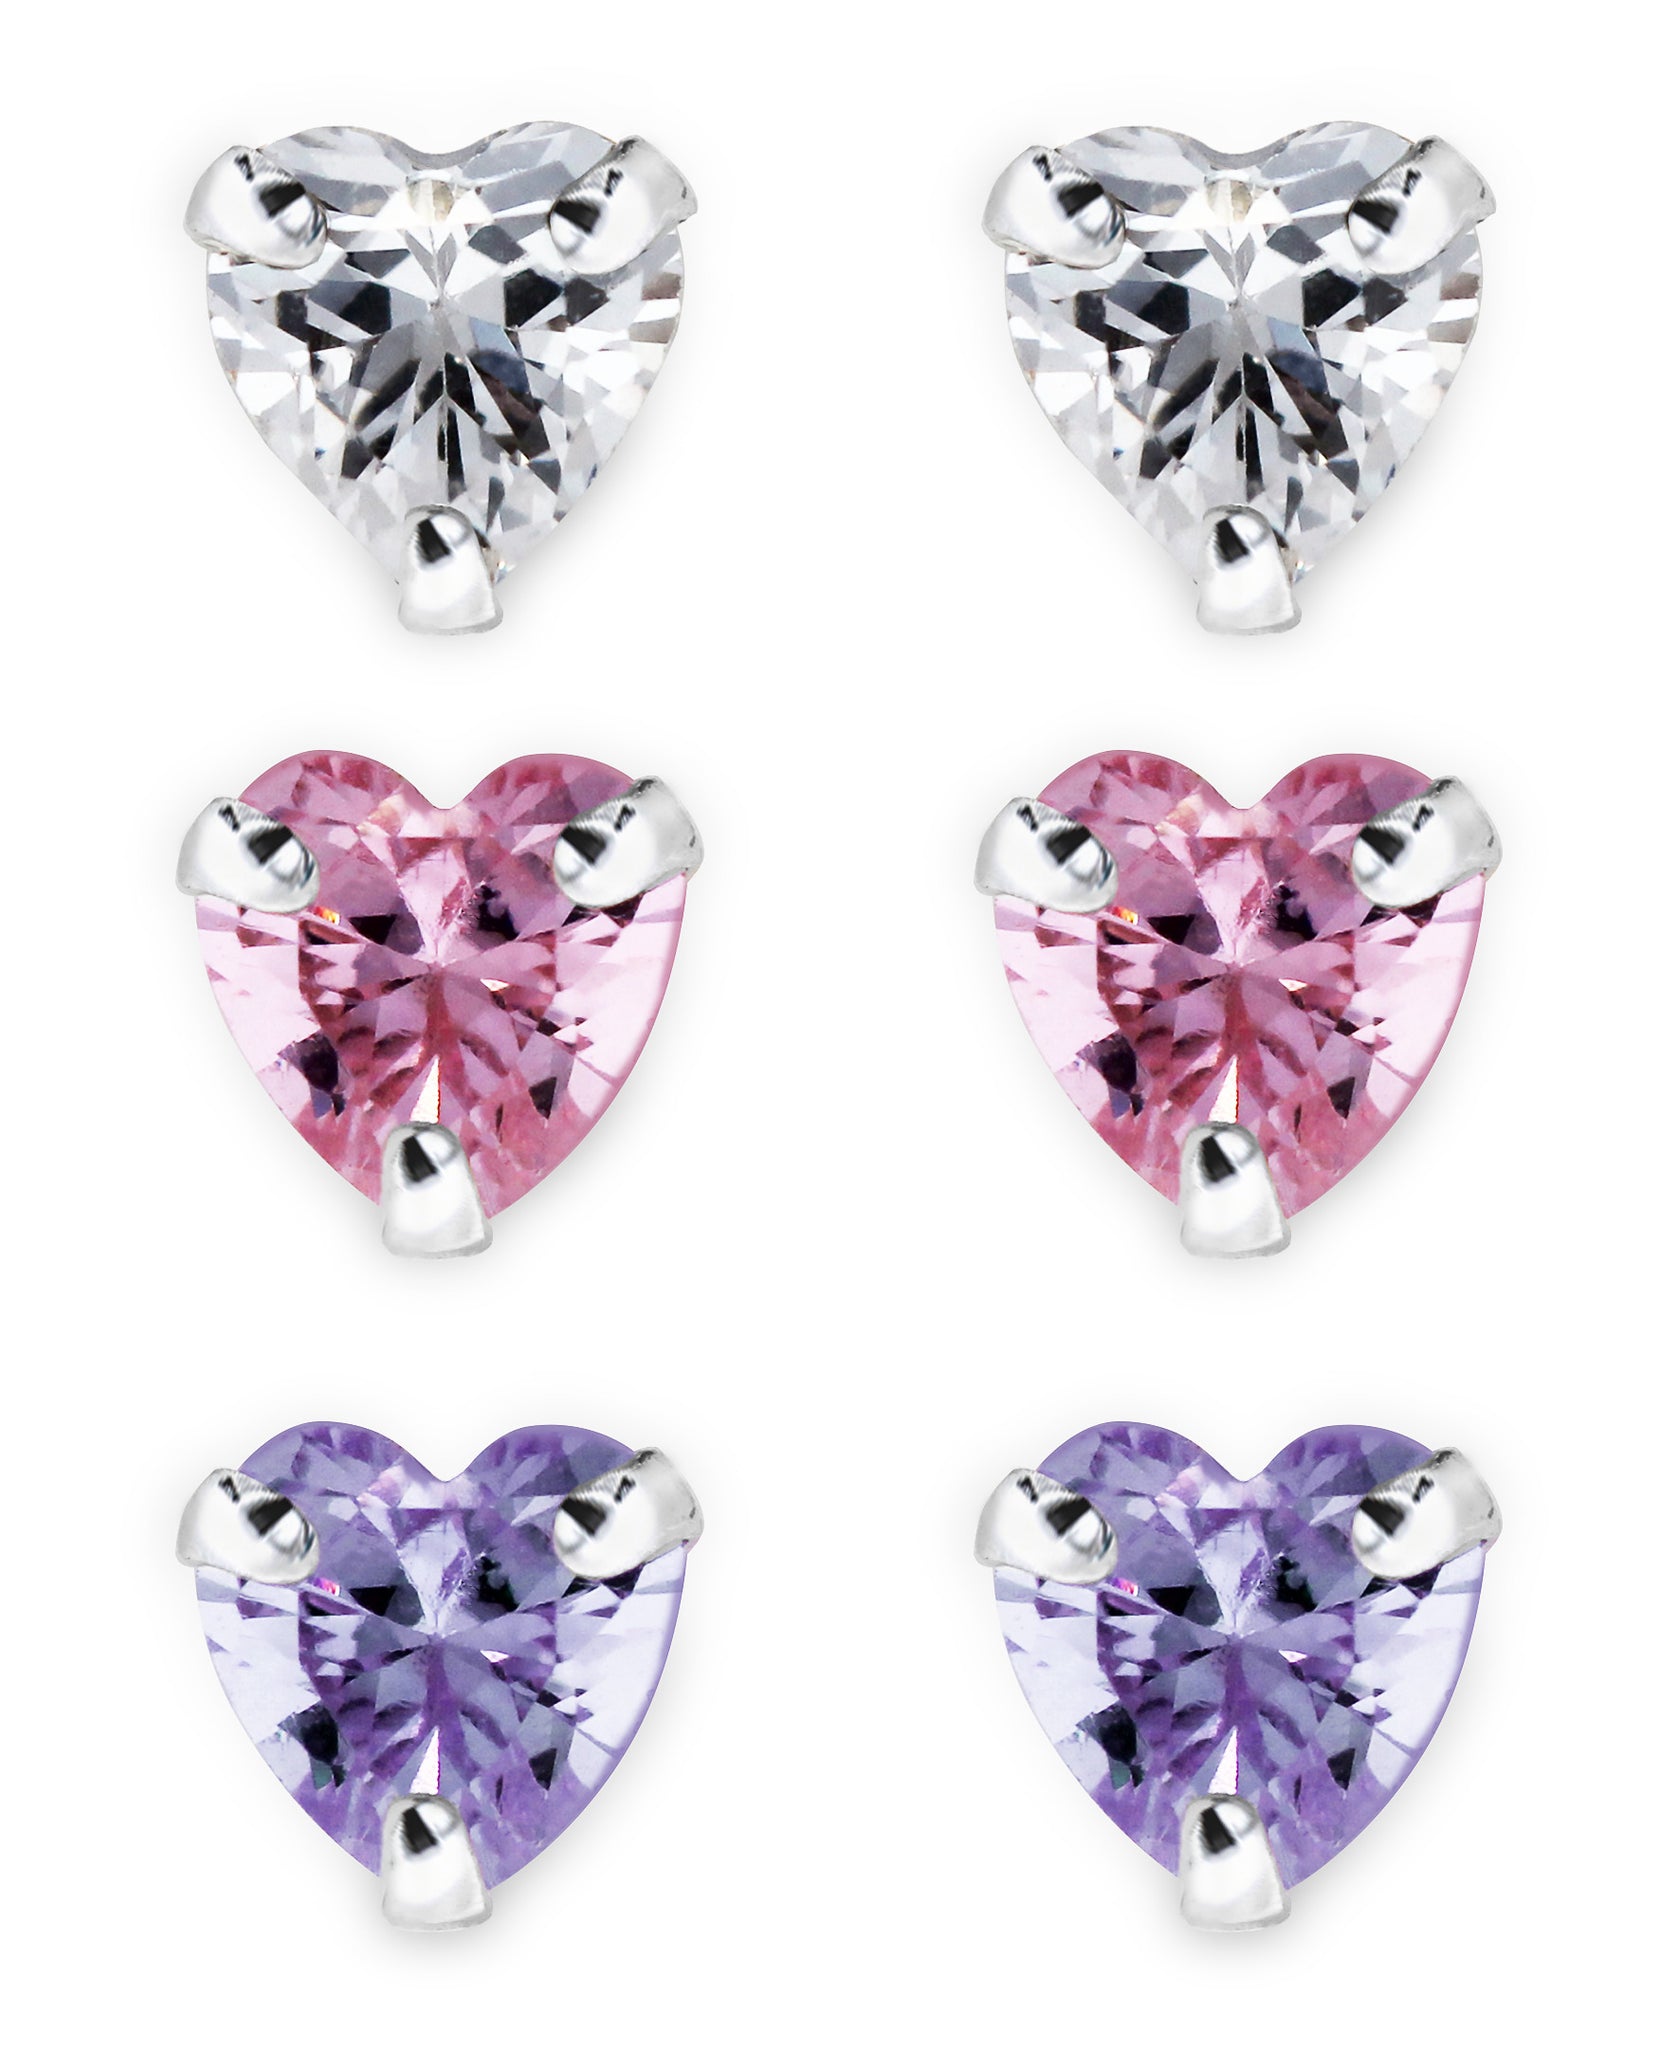 Children's Sterling Silver Colored Cubic Zirconia Heart Stud Earrings - Set of 3 - Rhona Sutton Jewellery